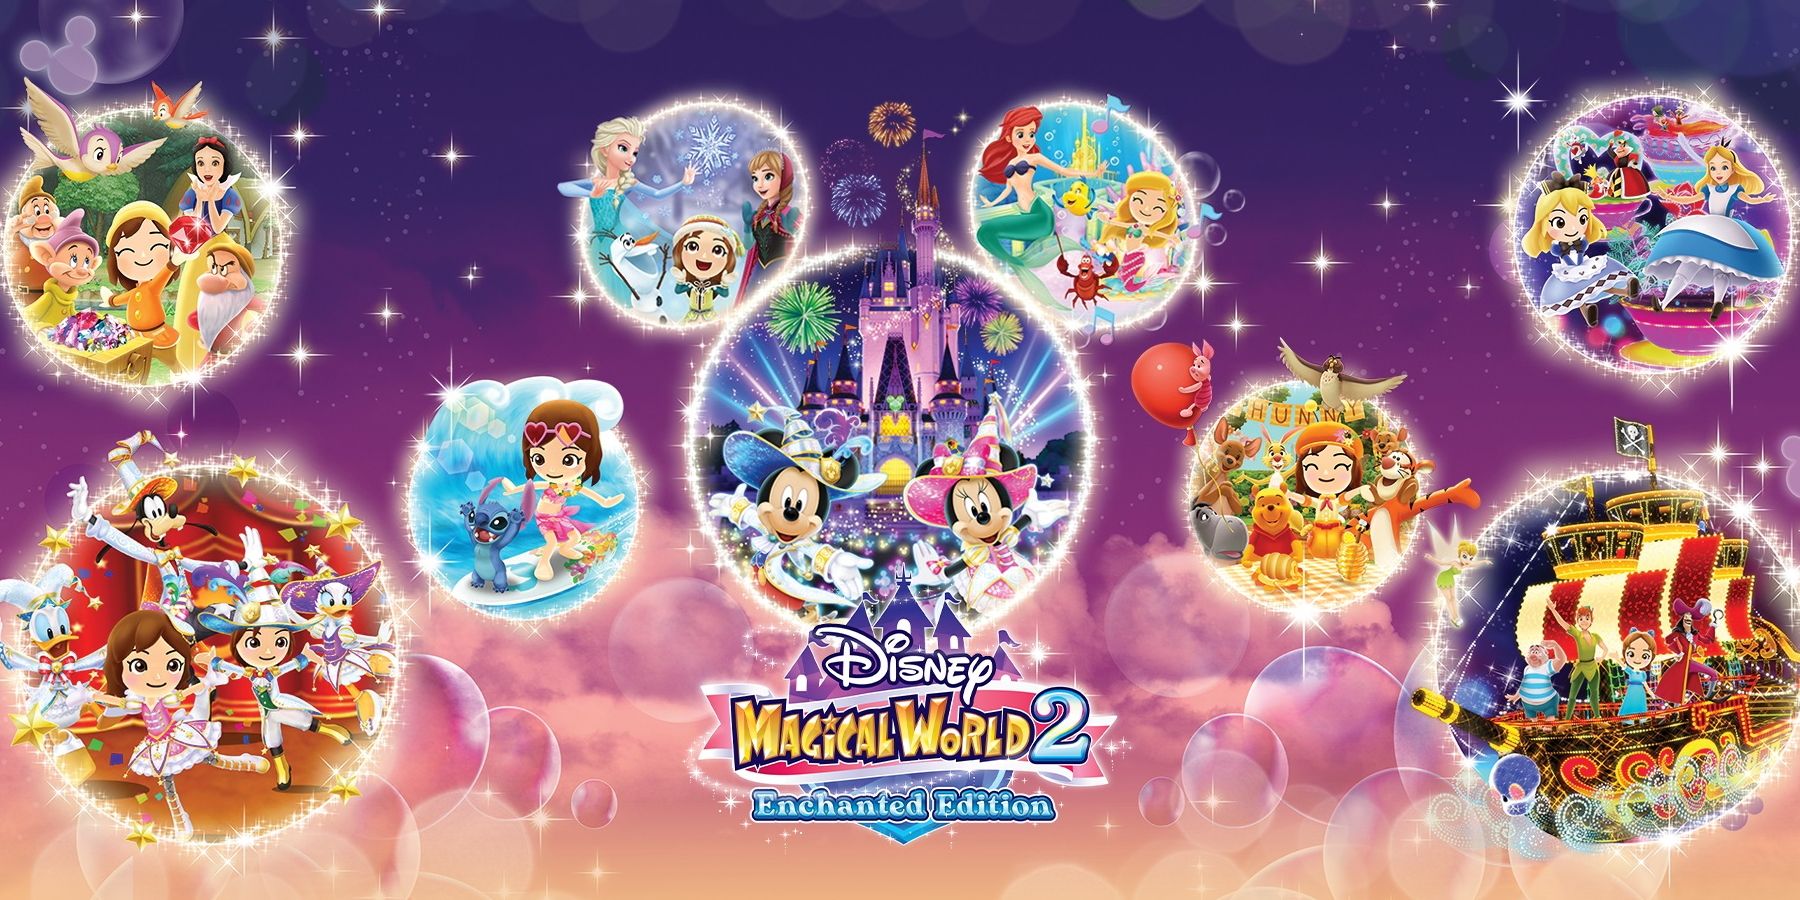 Disney Magical World 2: Enchanted Edition, který se letos přepne